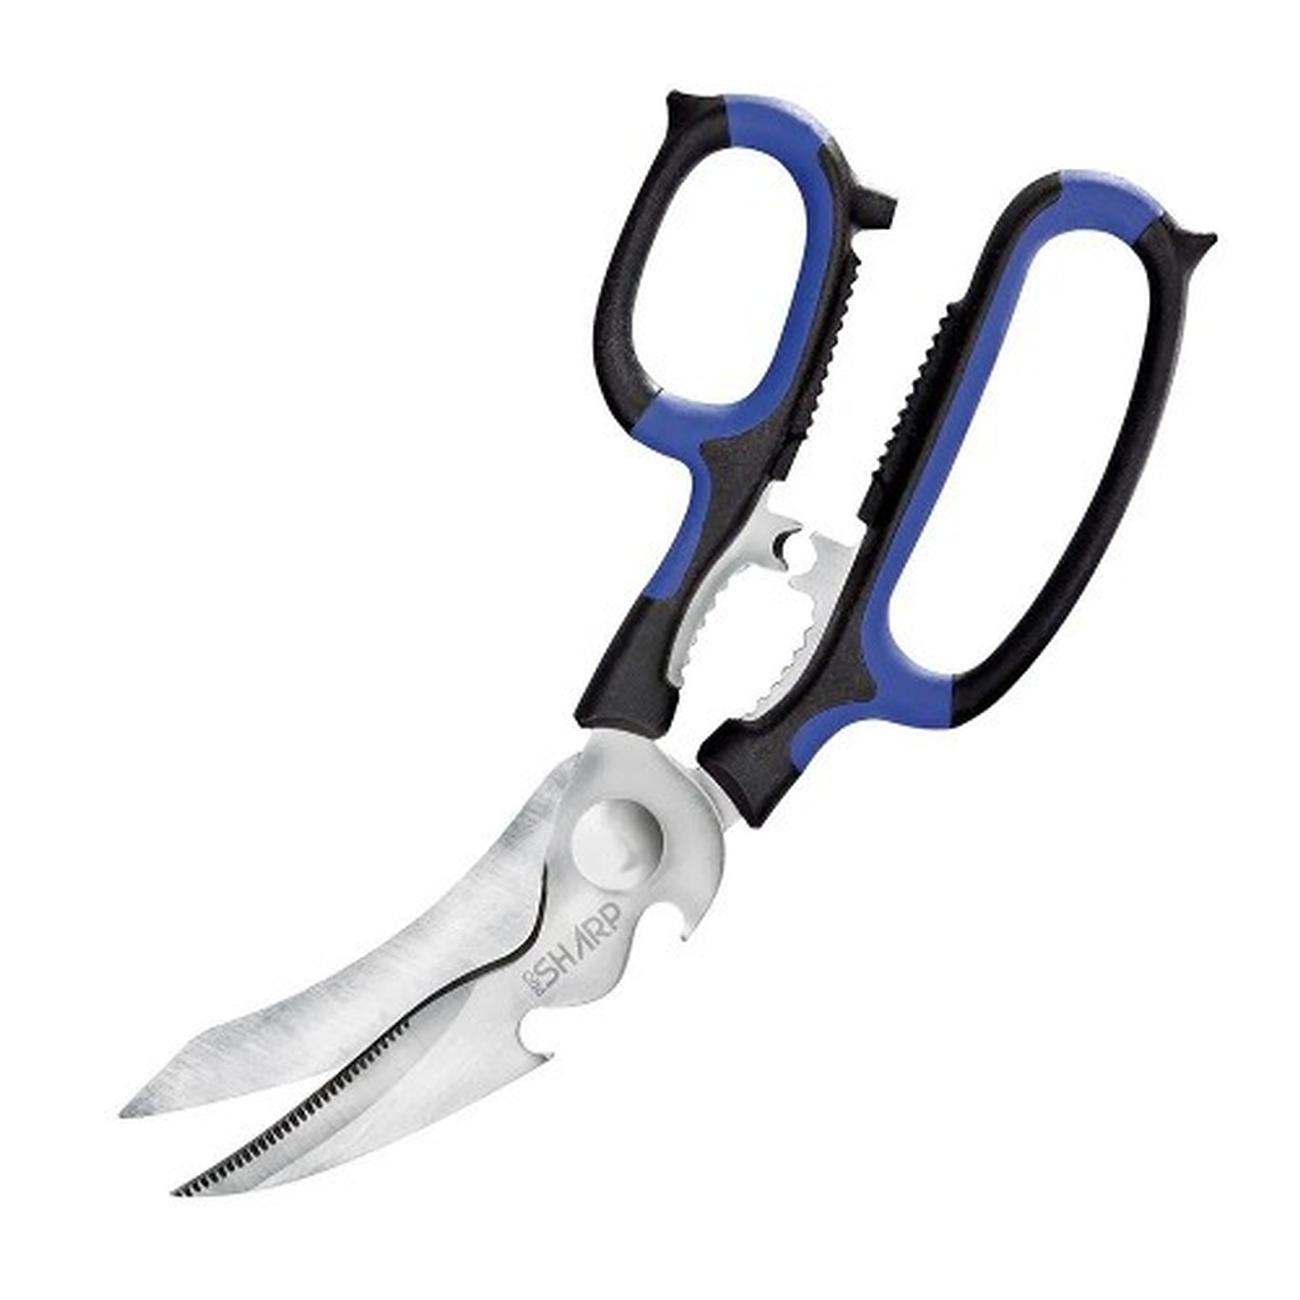 Kuhn Rikon Multi Use Kitchen Garden Household Blue Handle Scissors Shears  New